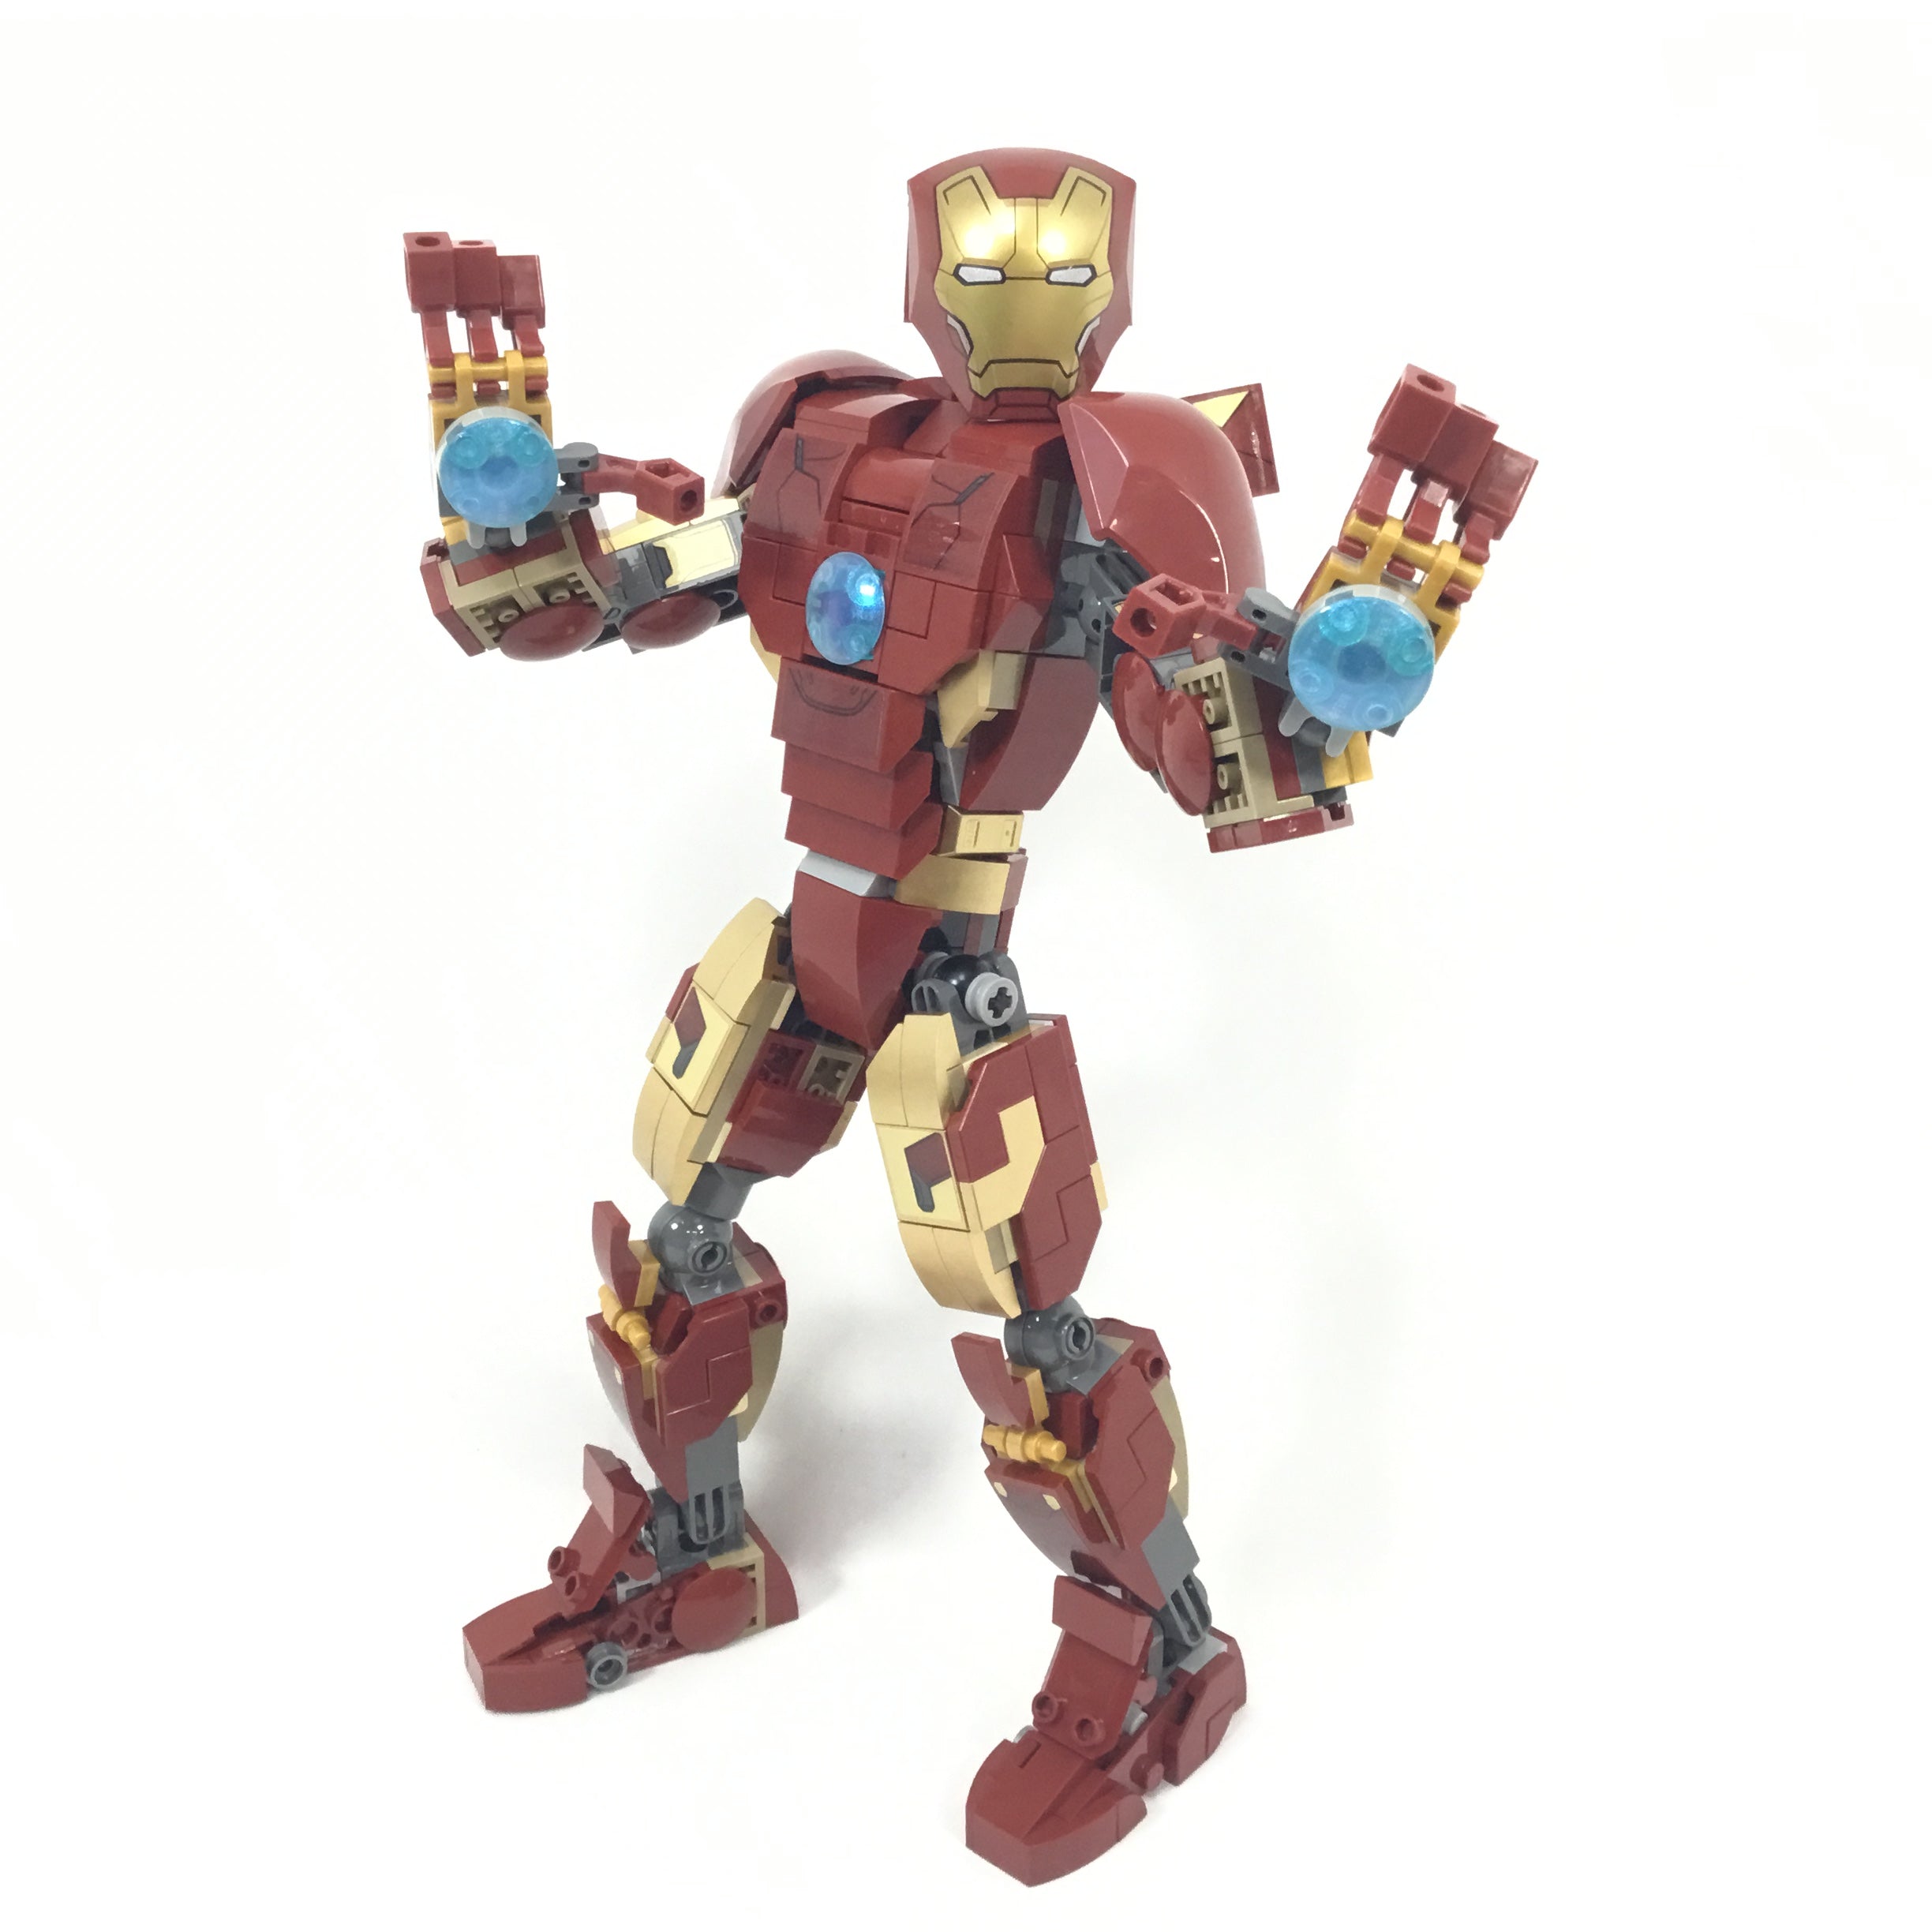 Custom Minifigures Minfinity Man of Iron Gauntlet